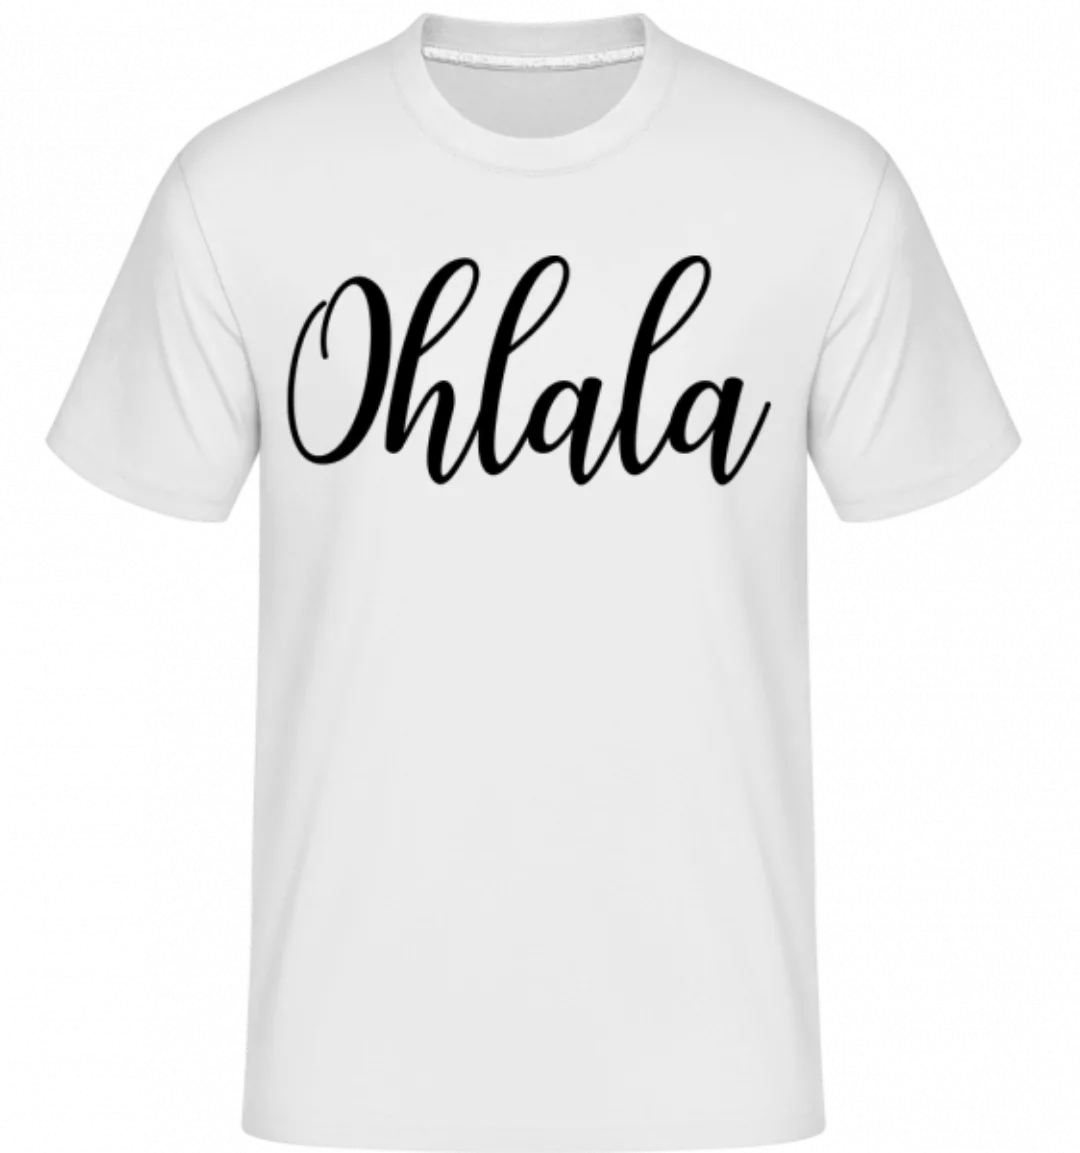 Ohlala · Shirtinator Männer T-Shirt günstig online kaufen